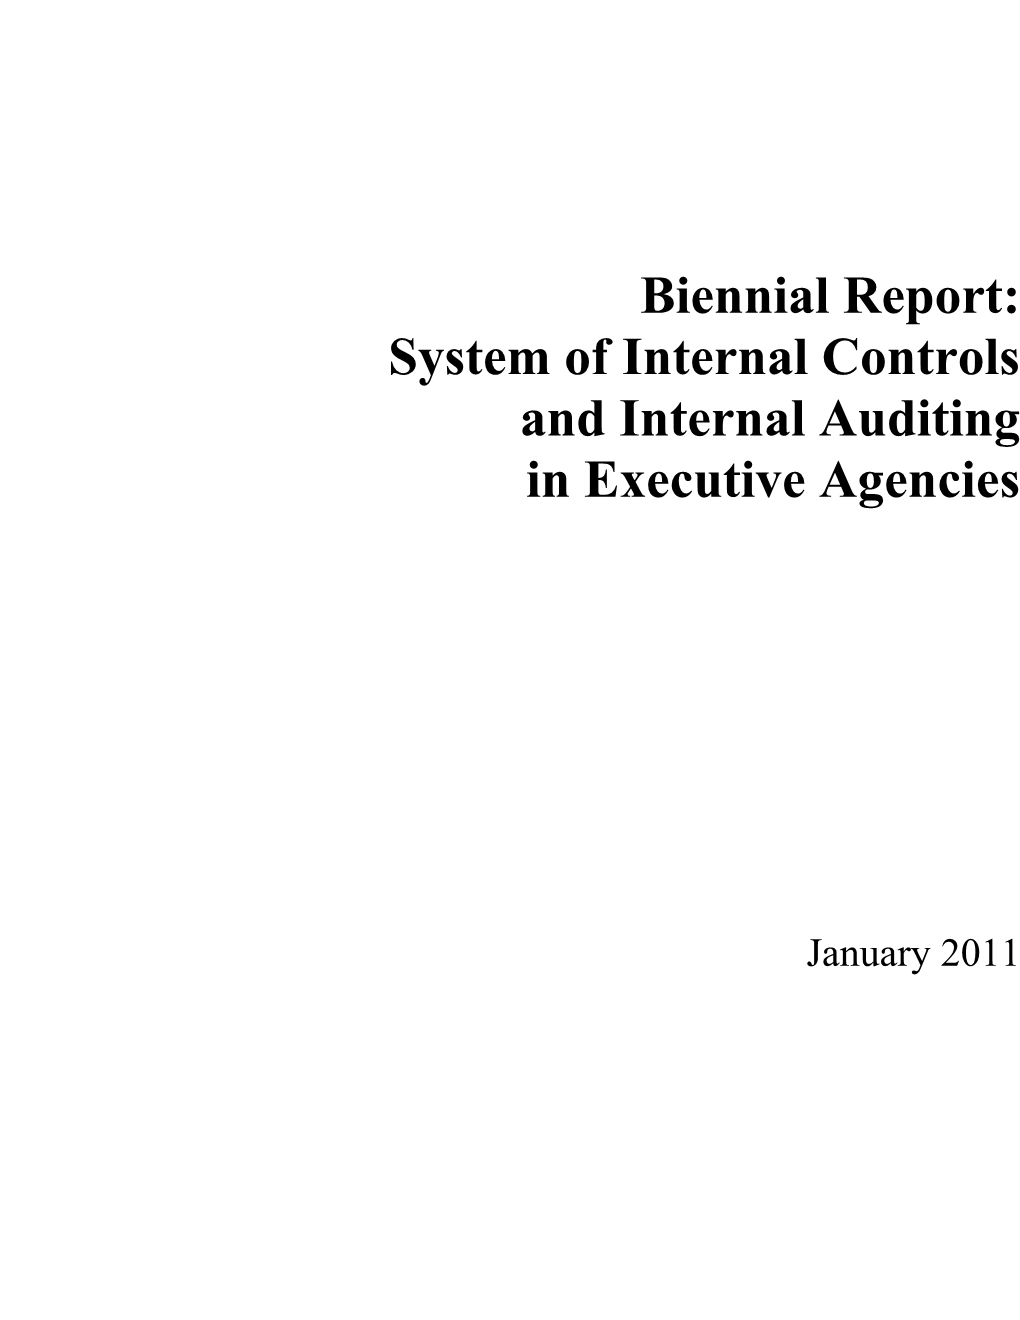 MMB 2011 Internal Control Biennial Report